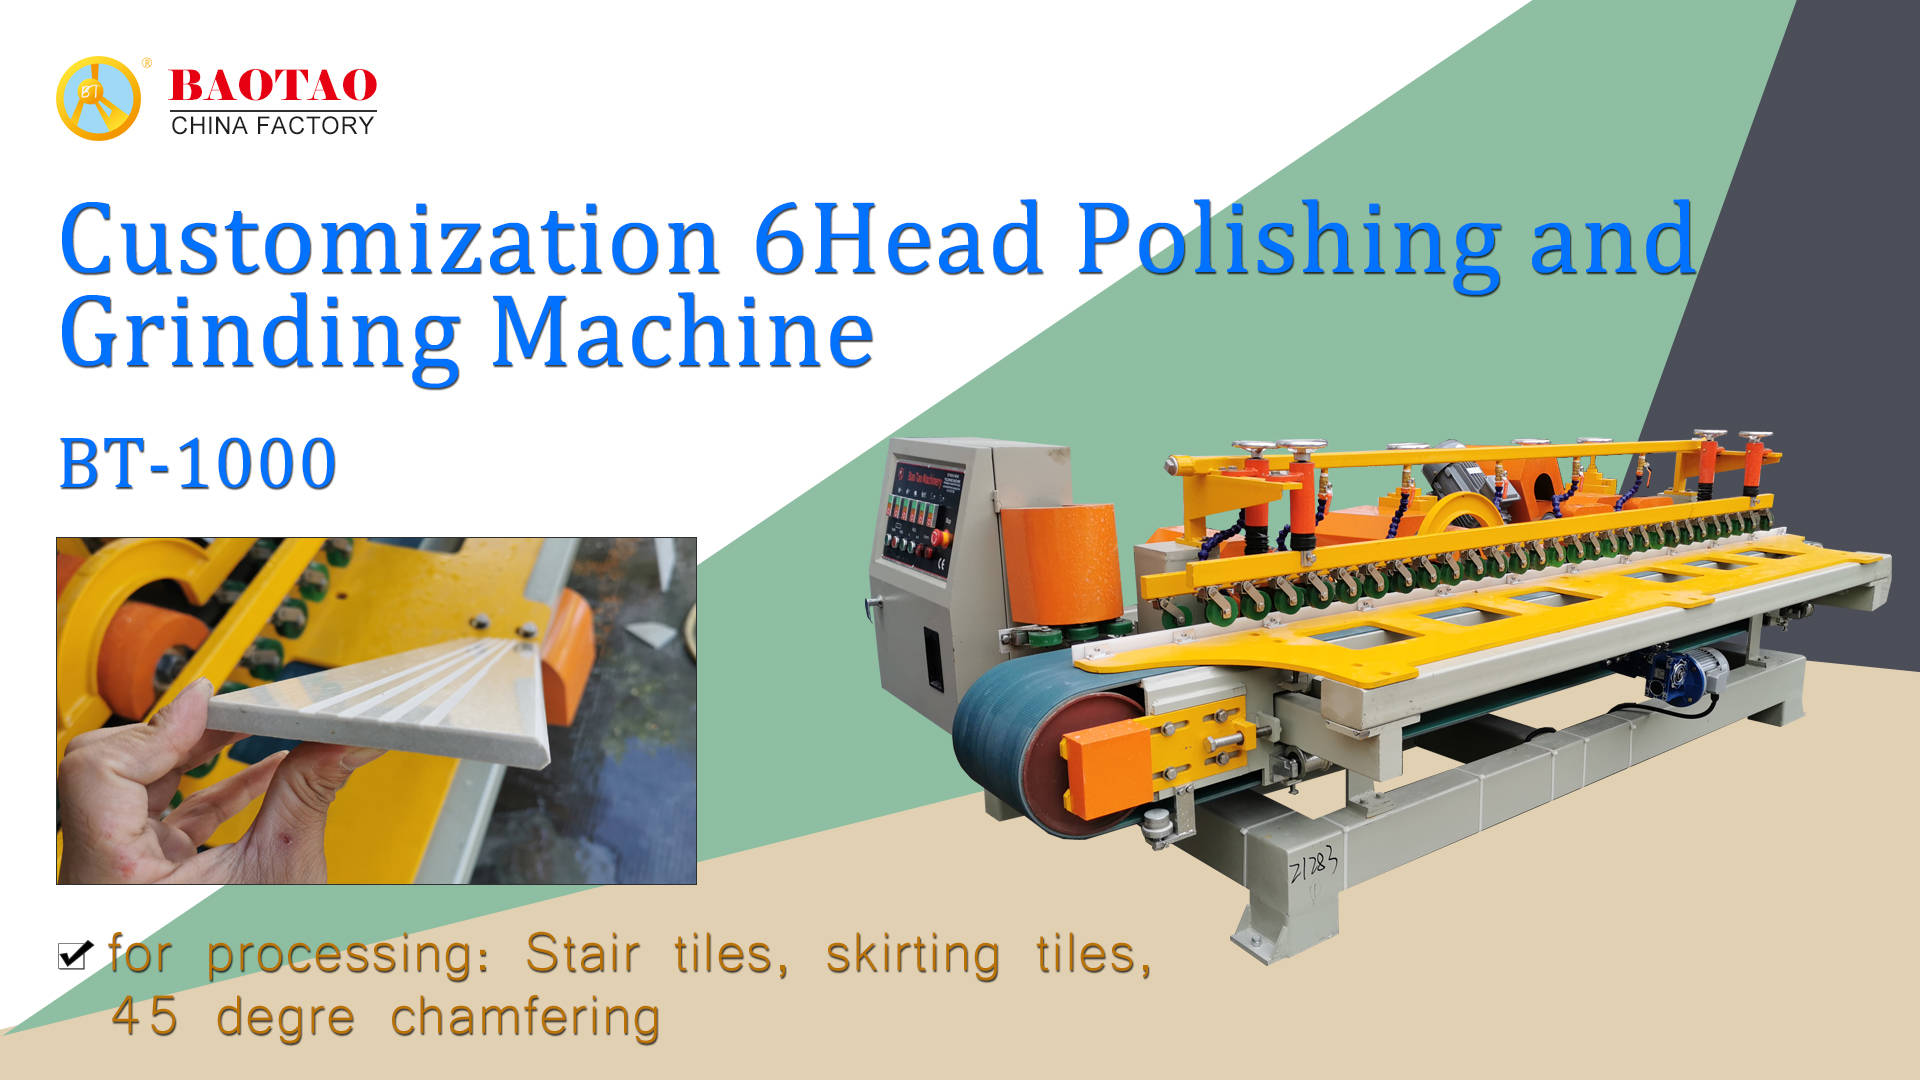 Baotao Customization 6Heads Polishing and Grinding Machine